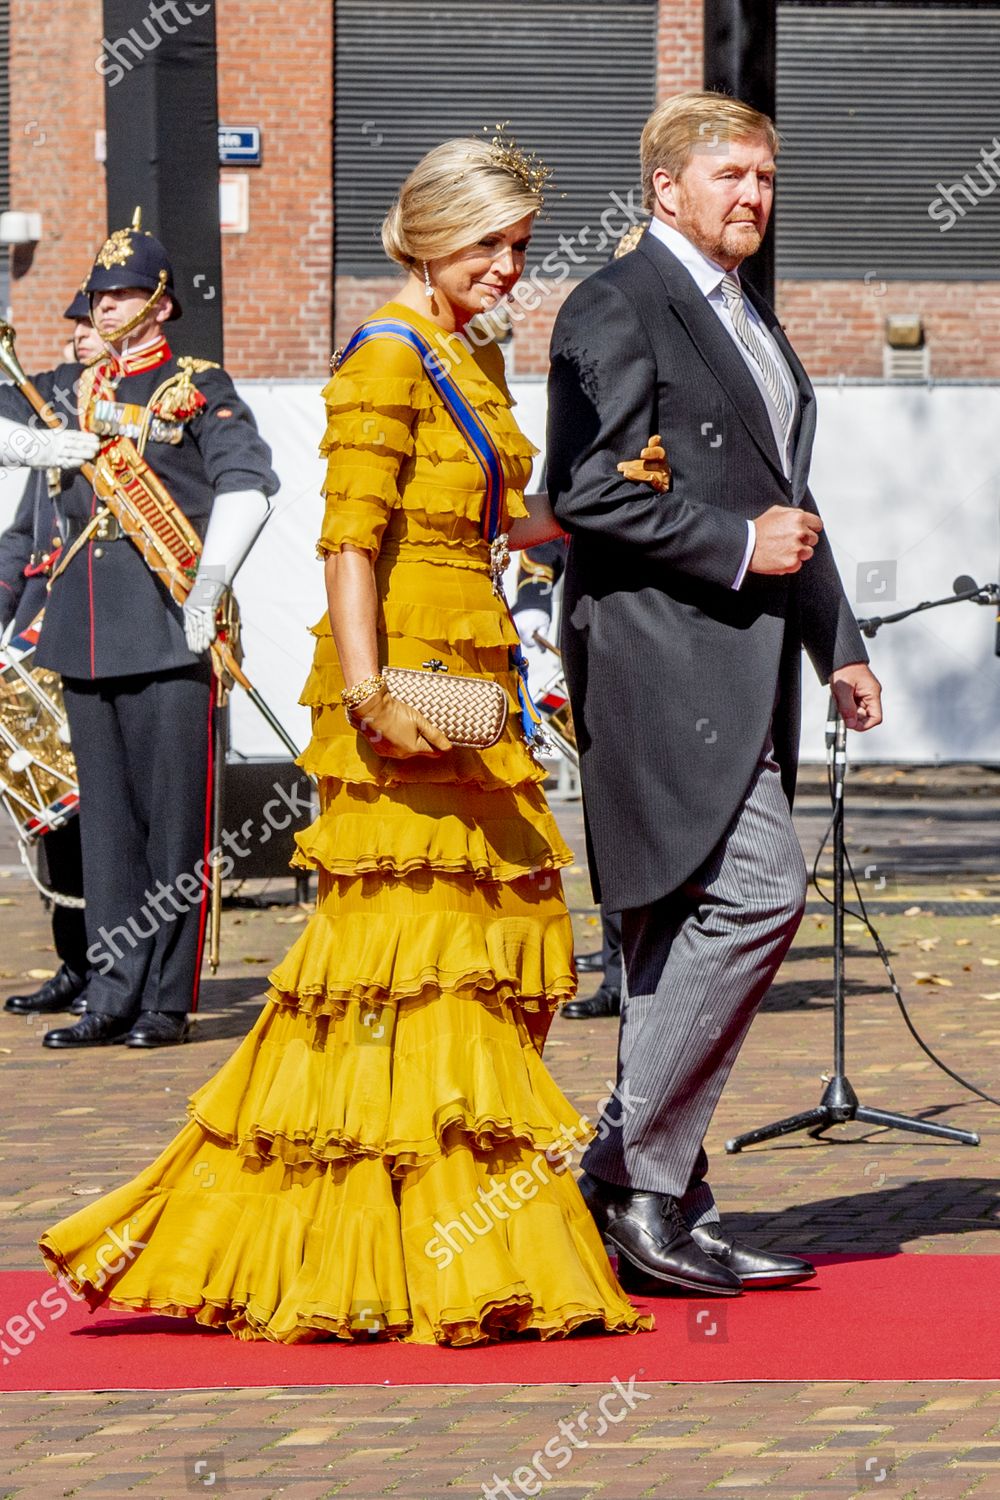 prinsjesdag-ceremony-the-hague-the-netherlands-shutterstock-editorial-10777298r.jpg